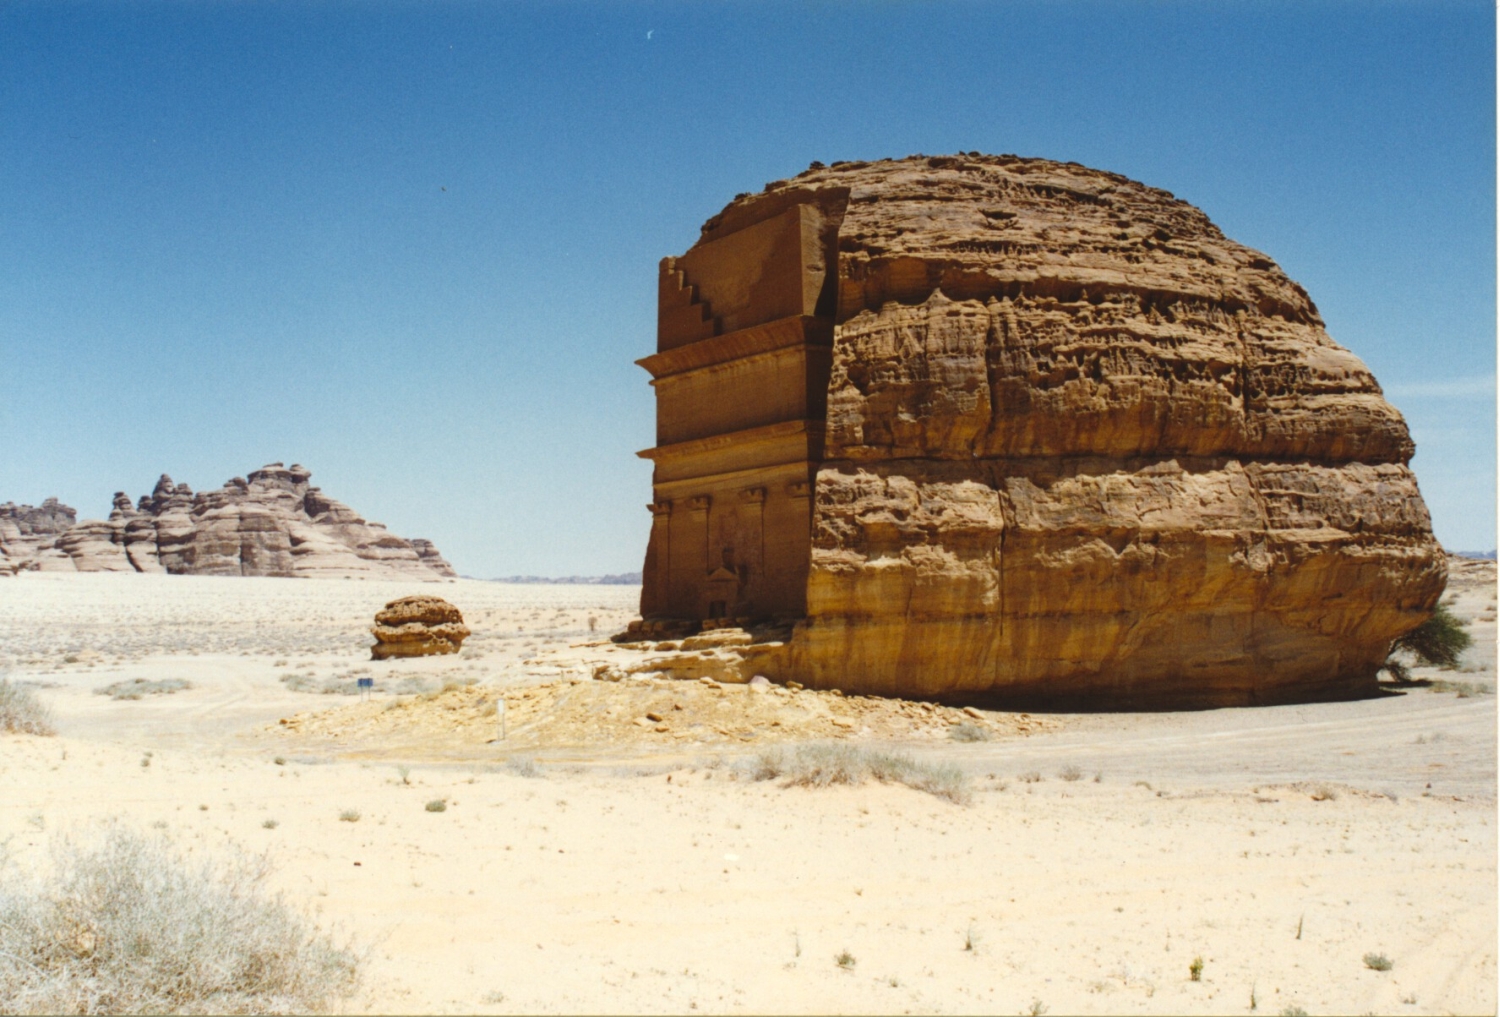 Qasr Al-Farid showing the containing sandstone mass